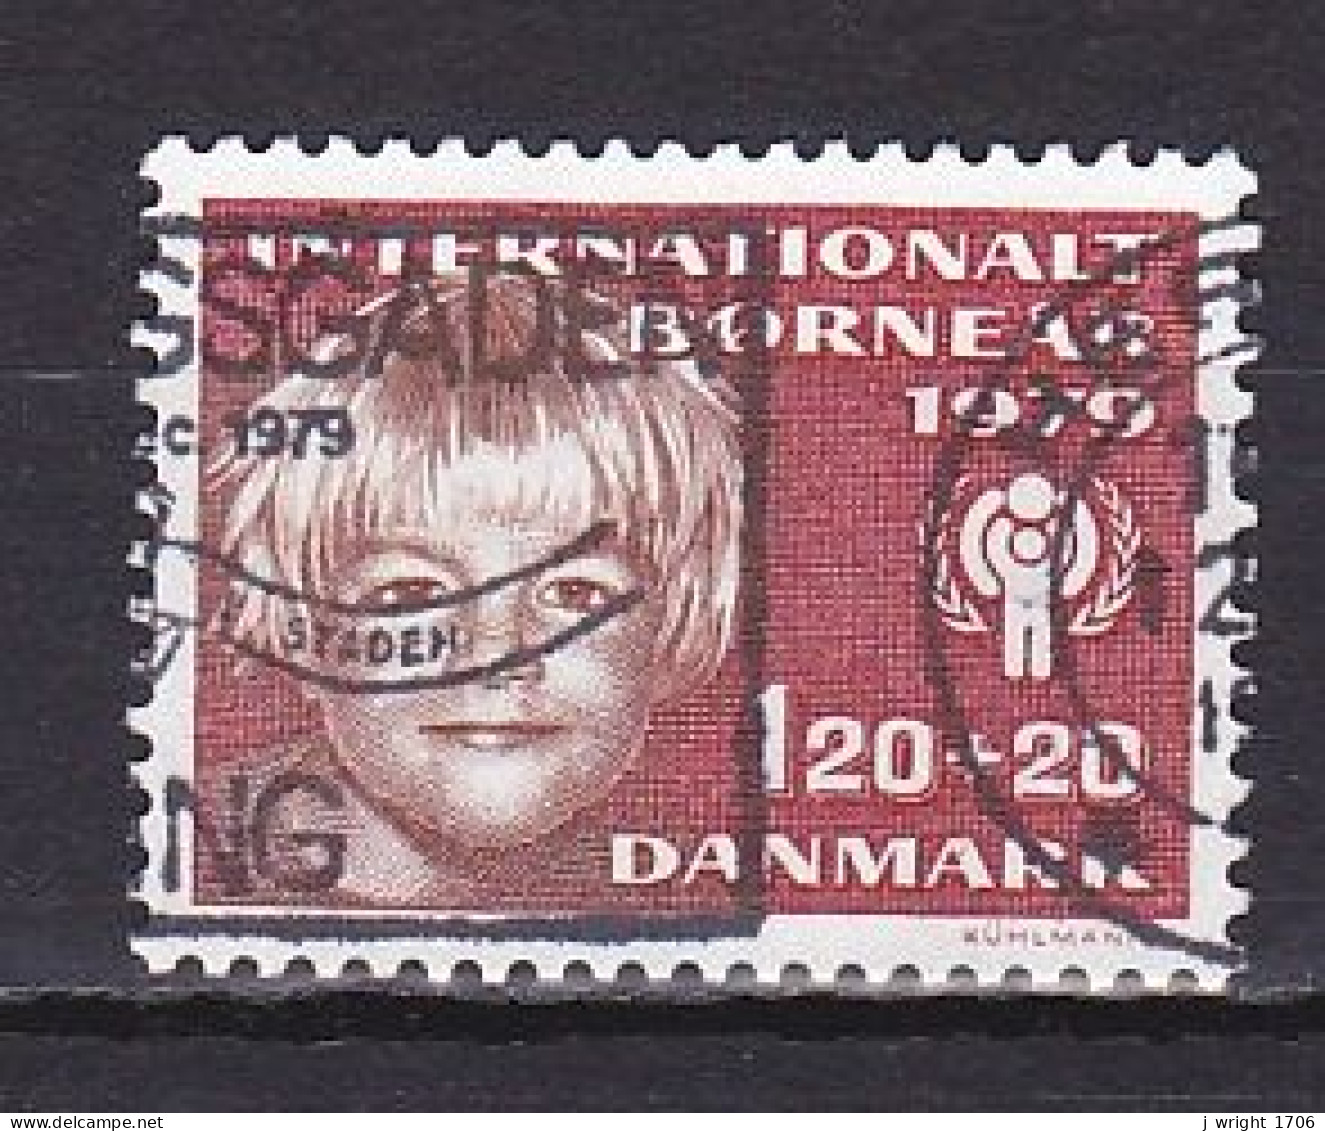 Denmark, 1979, International Year Of The Child, 120ø + 20ø, USED - Usati